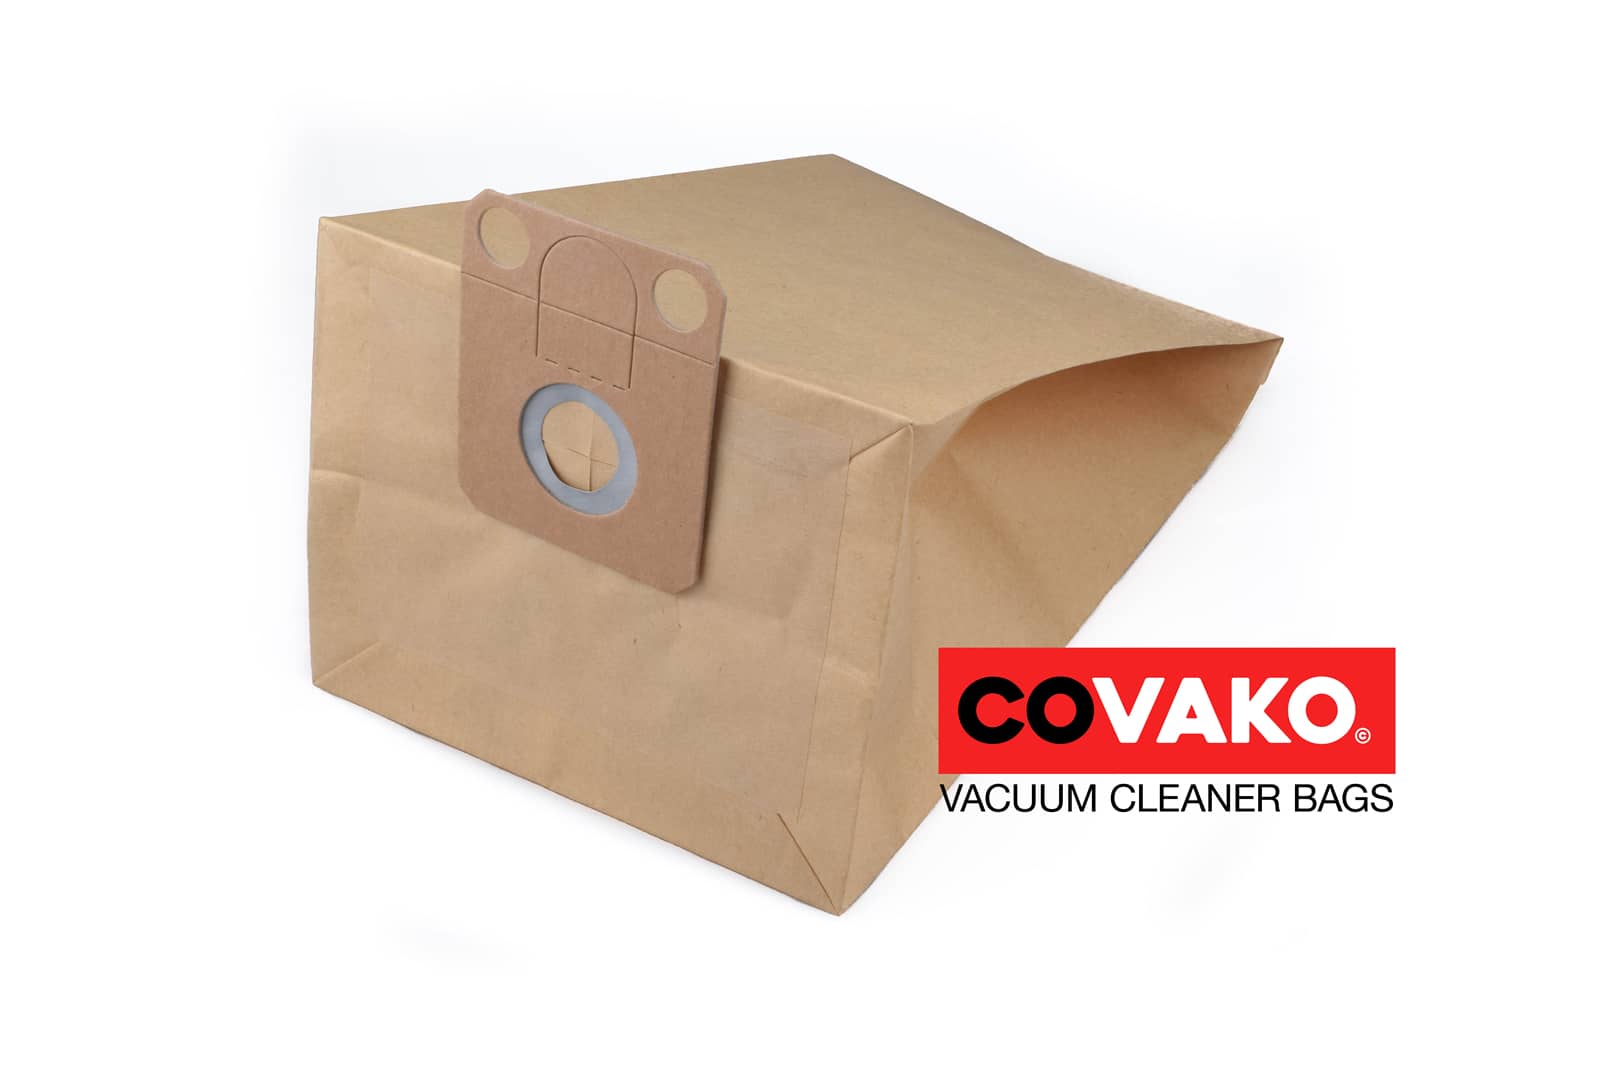 Alto GDP 2000 / Paper - Alto vacuum cleaner bags